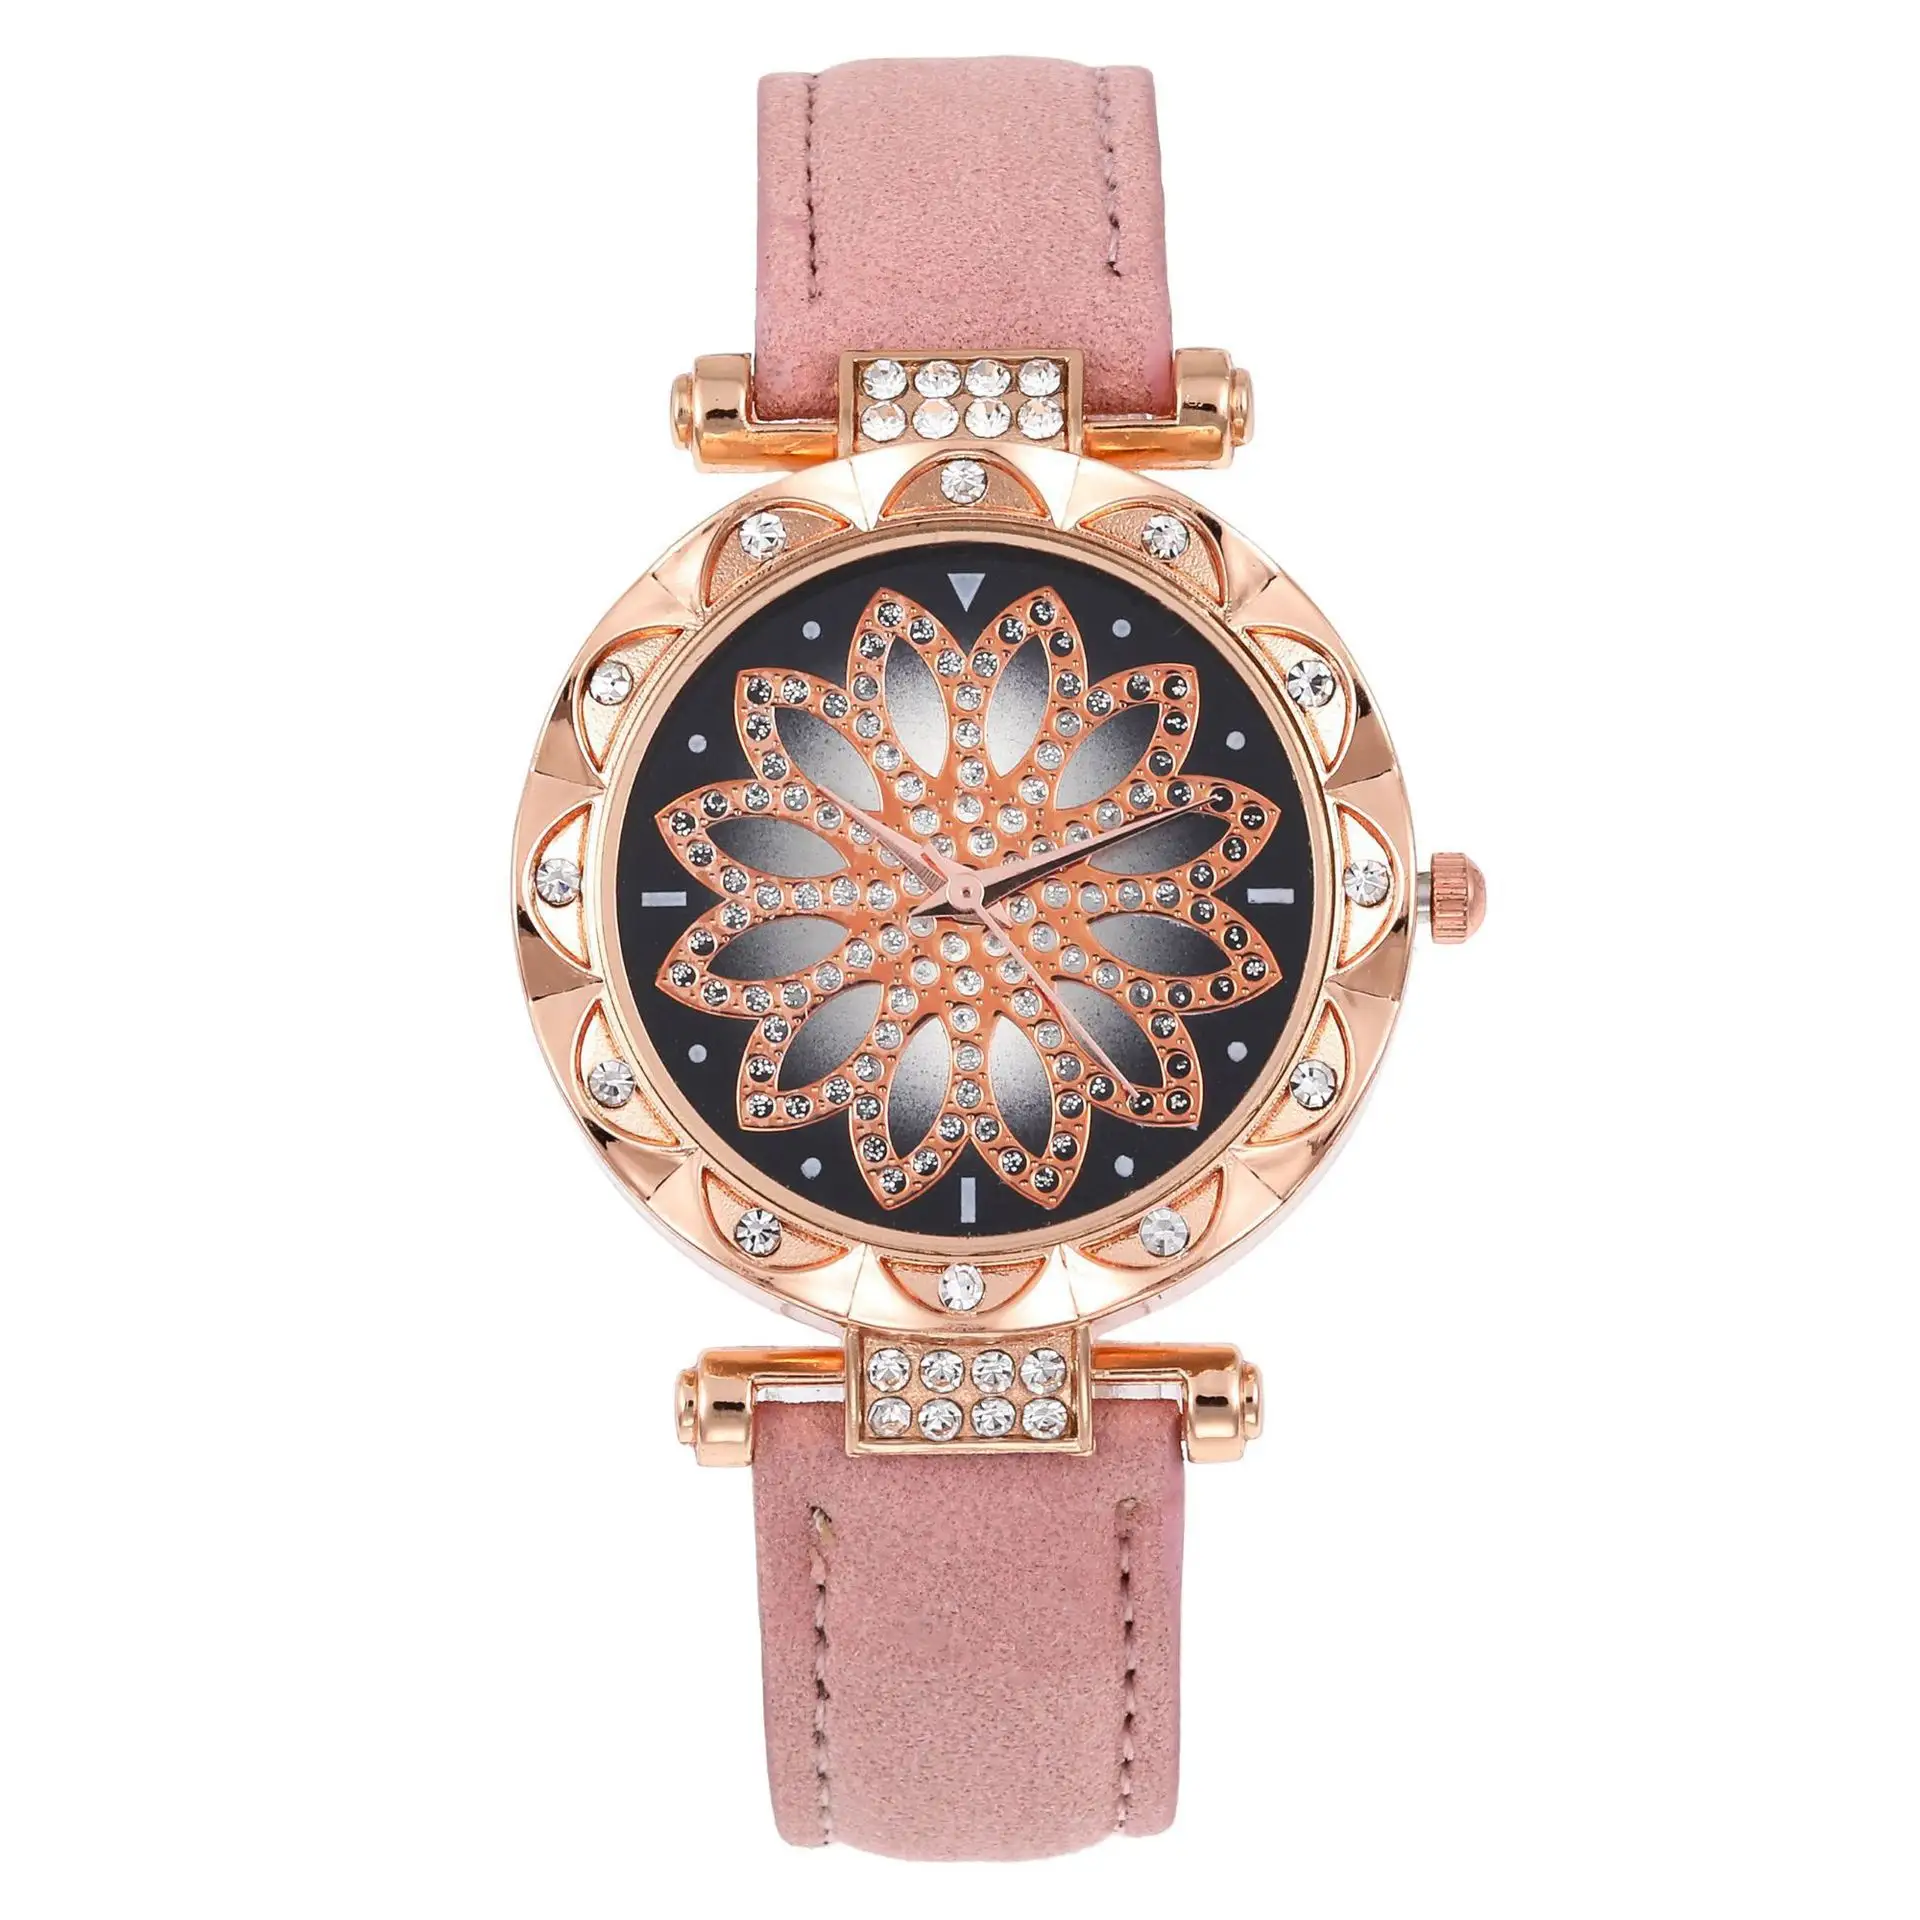 2pcs Set Luxury Women Gold Watch Fashion Ladies Quartz Diamond Wristwatch Elegant Female Bracelet Watches